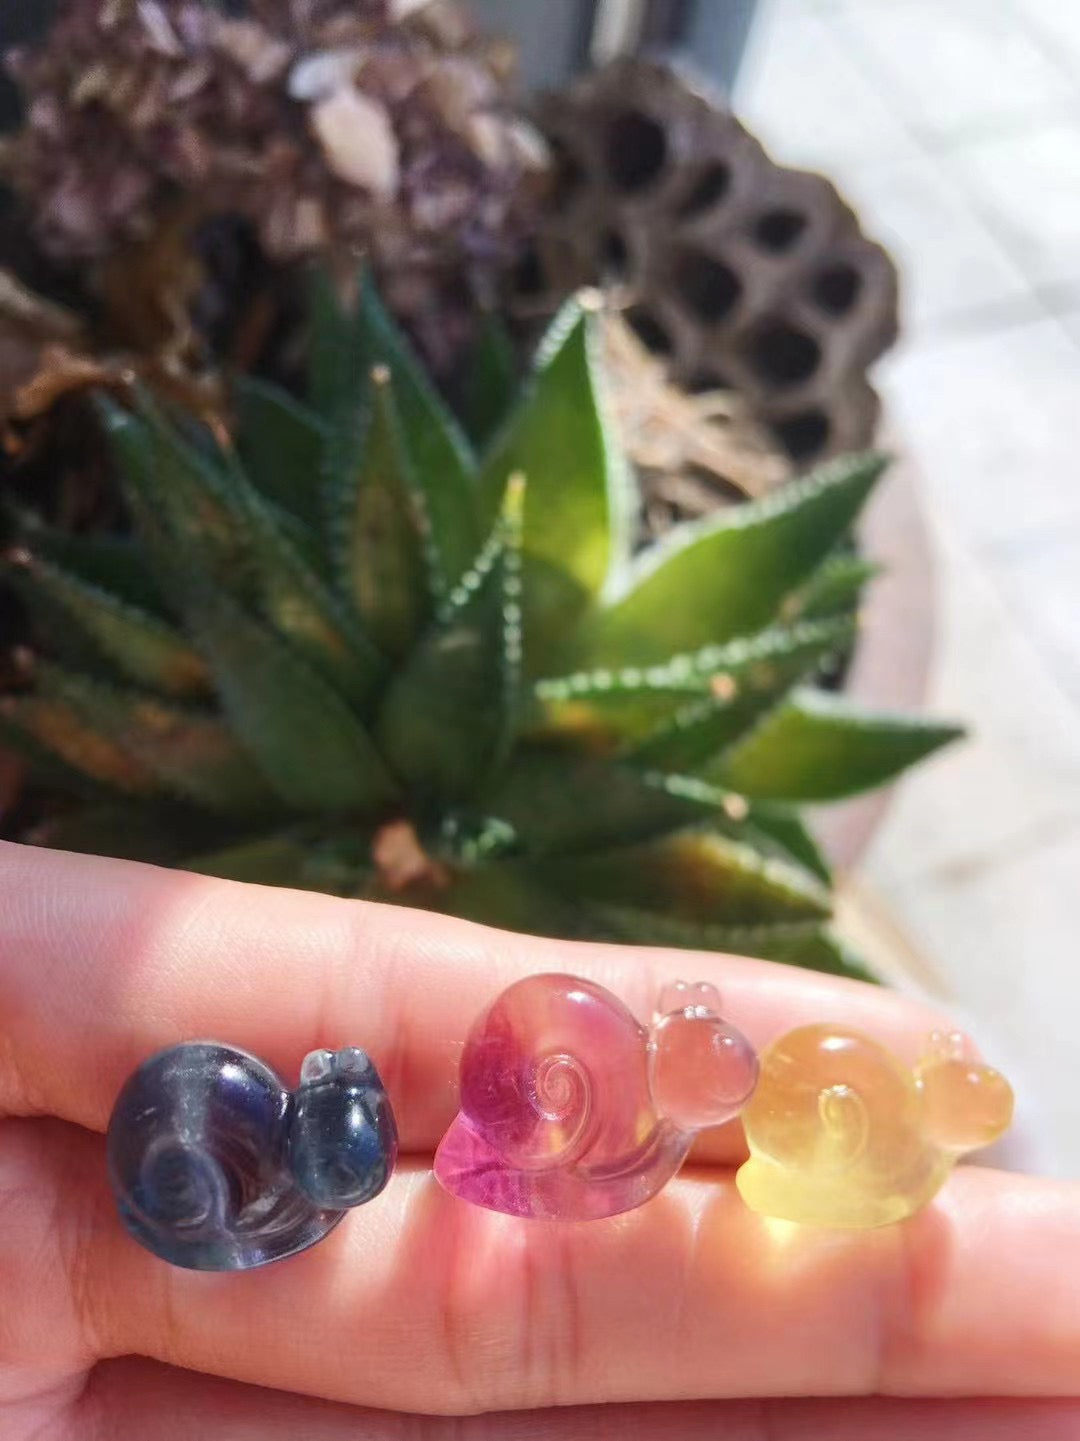 Mini Fluorite Crystal shaped like Buddha, Rabbit, and Hamster2